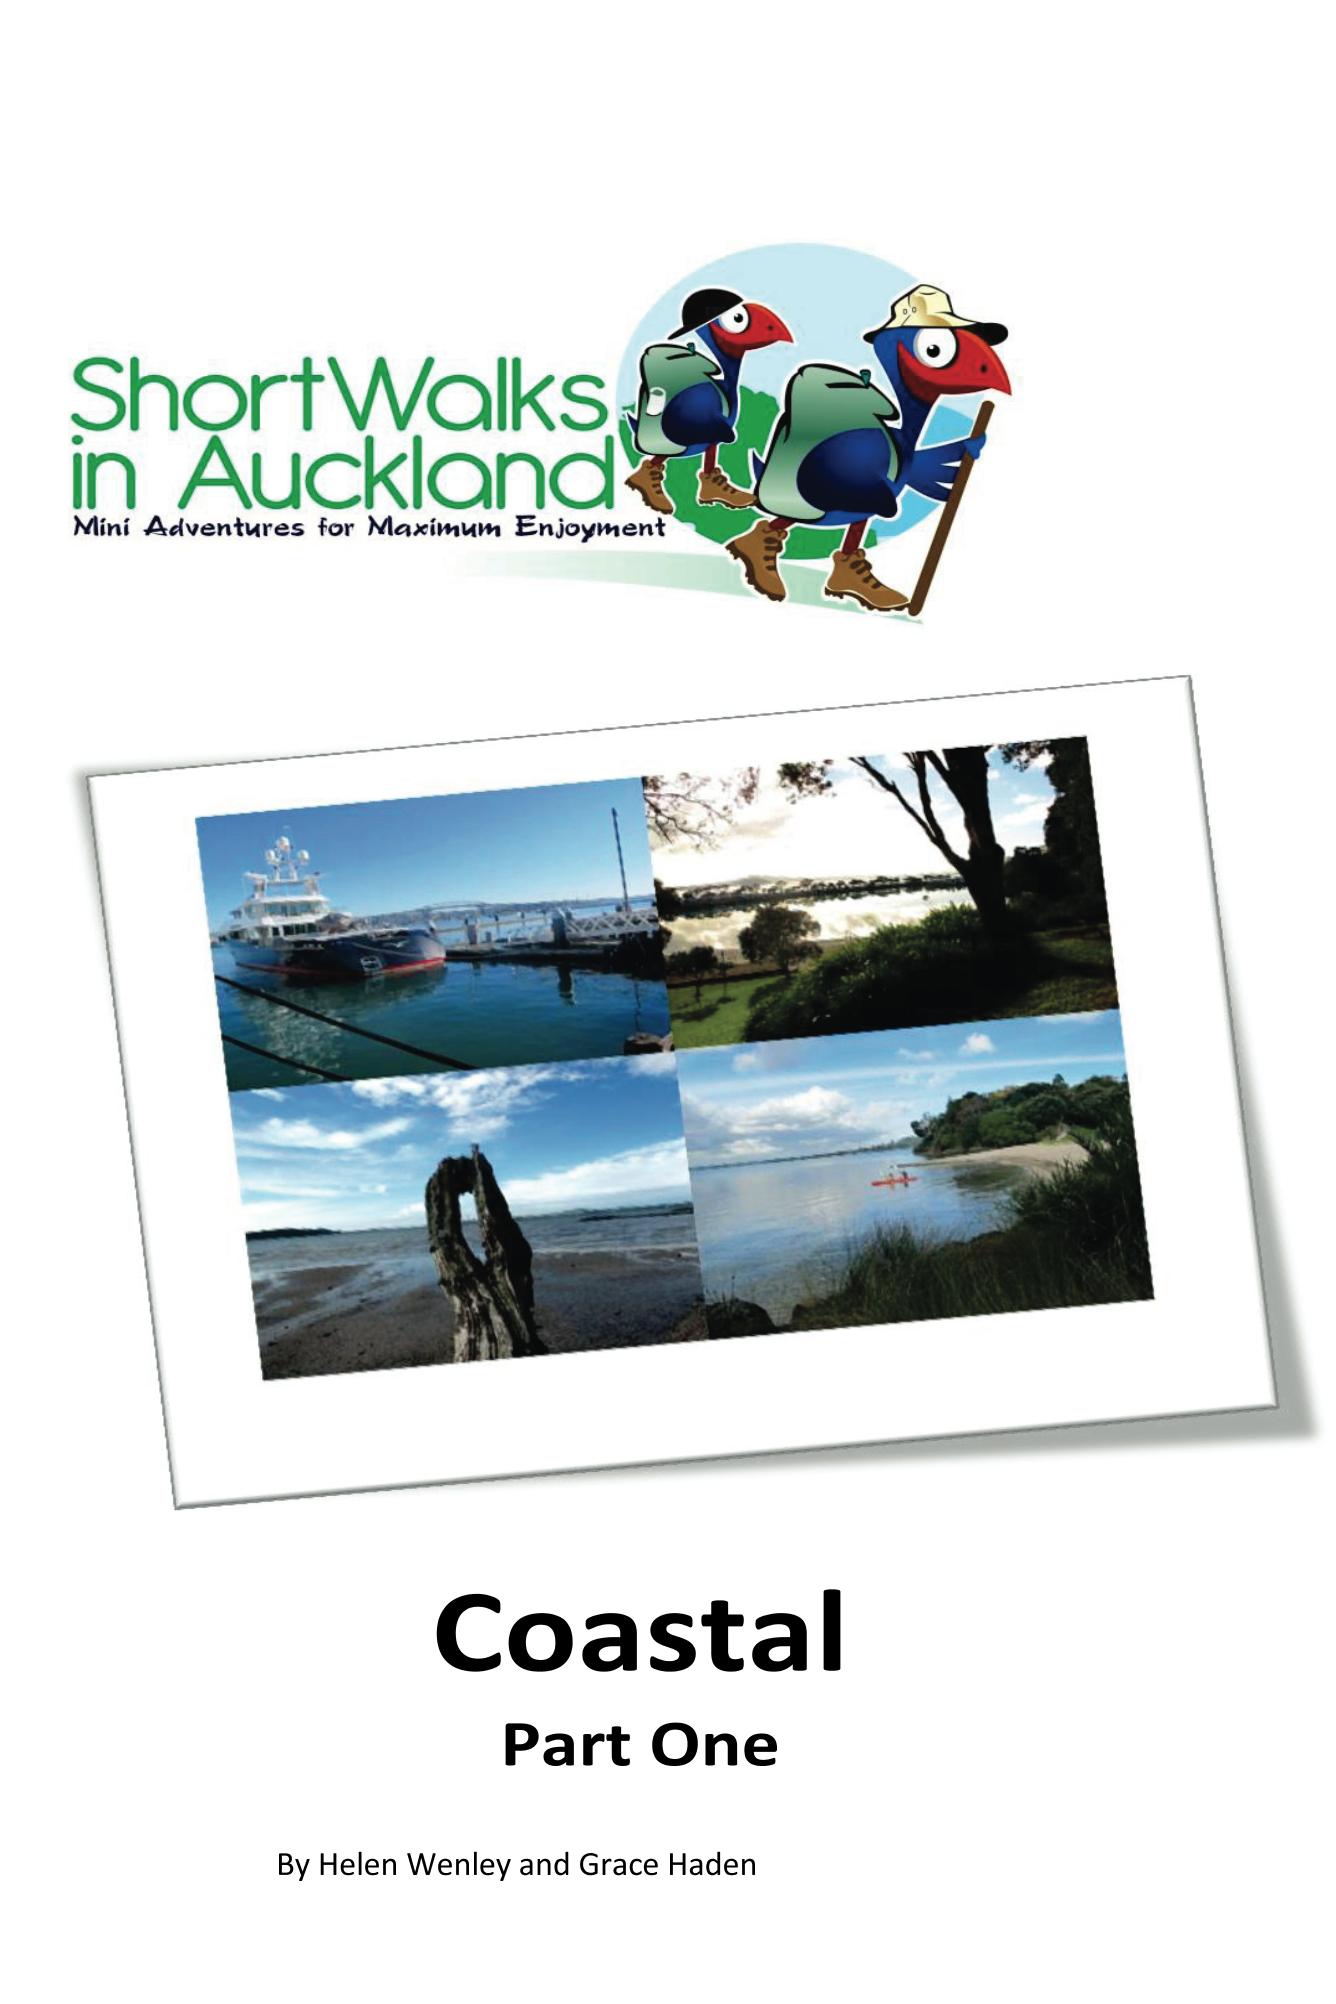 coastal walks (part one) in Auckland